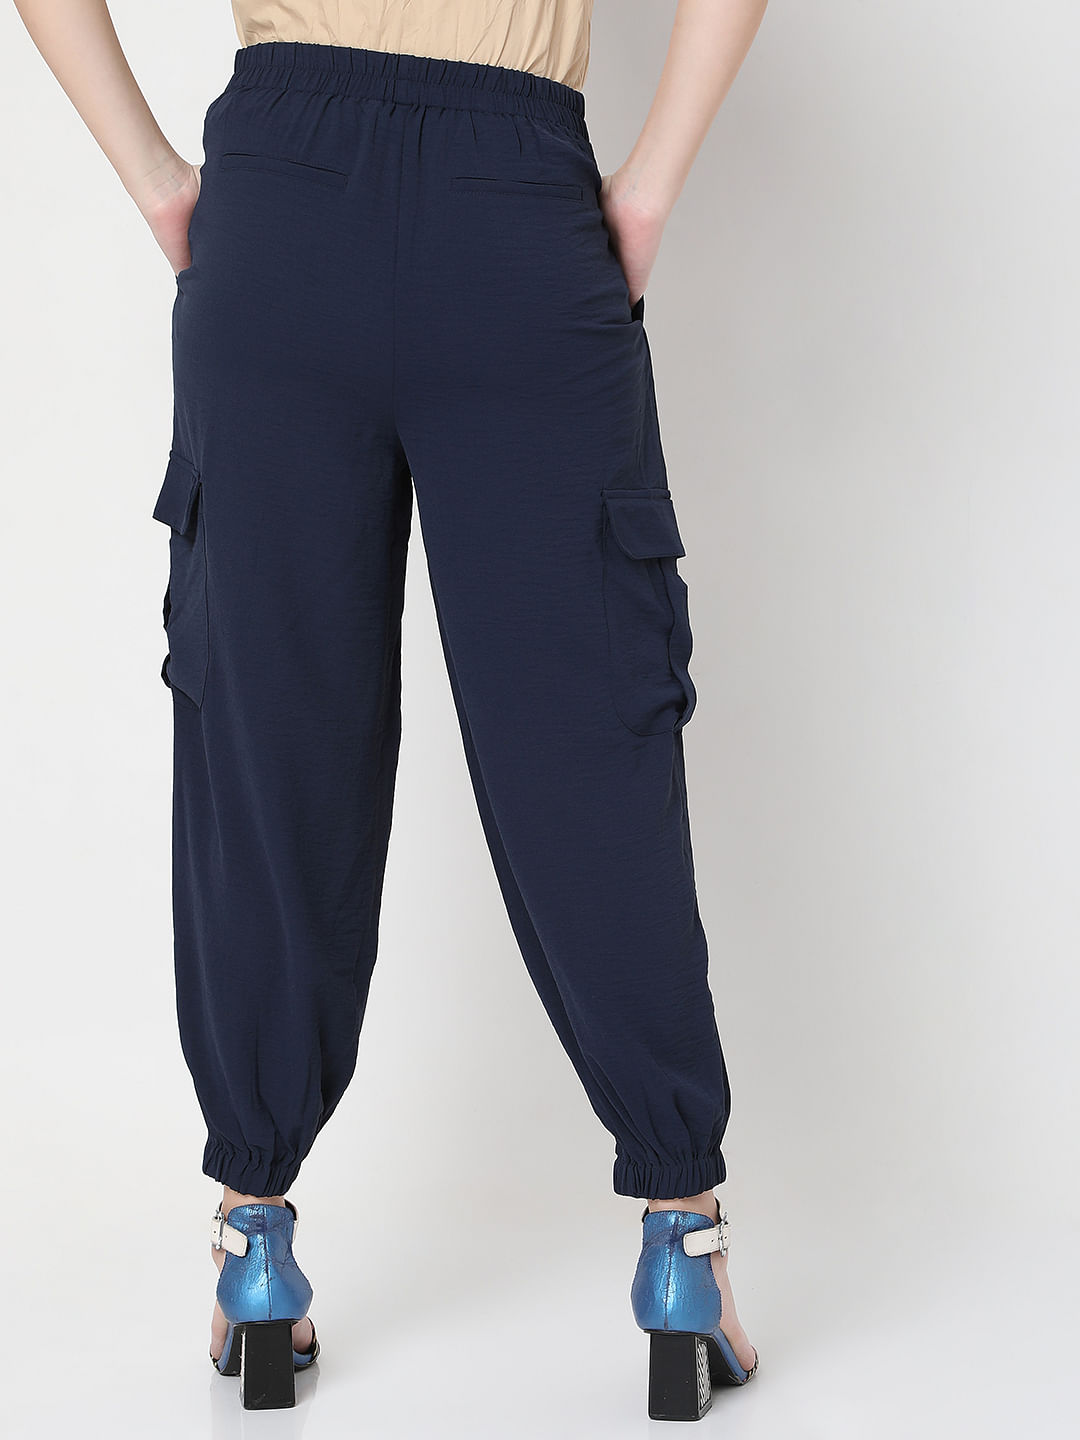 Men's Cargo Pants with Belt Navy Blue Bolf 1672 NAVY BLUE